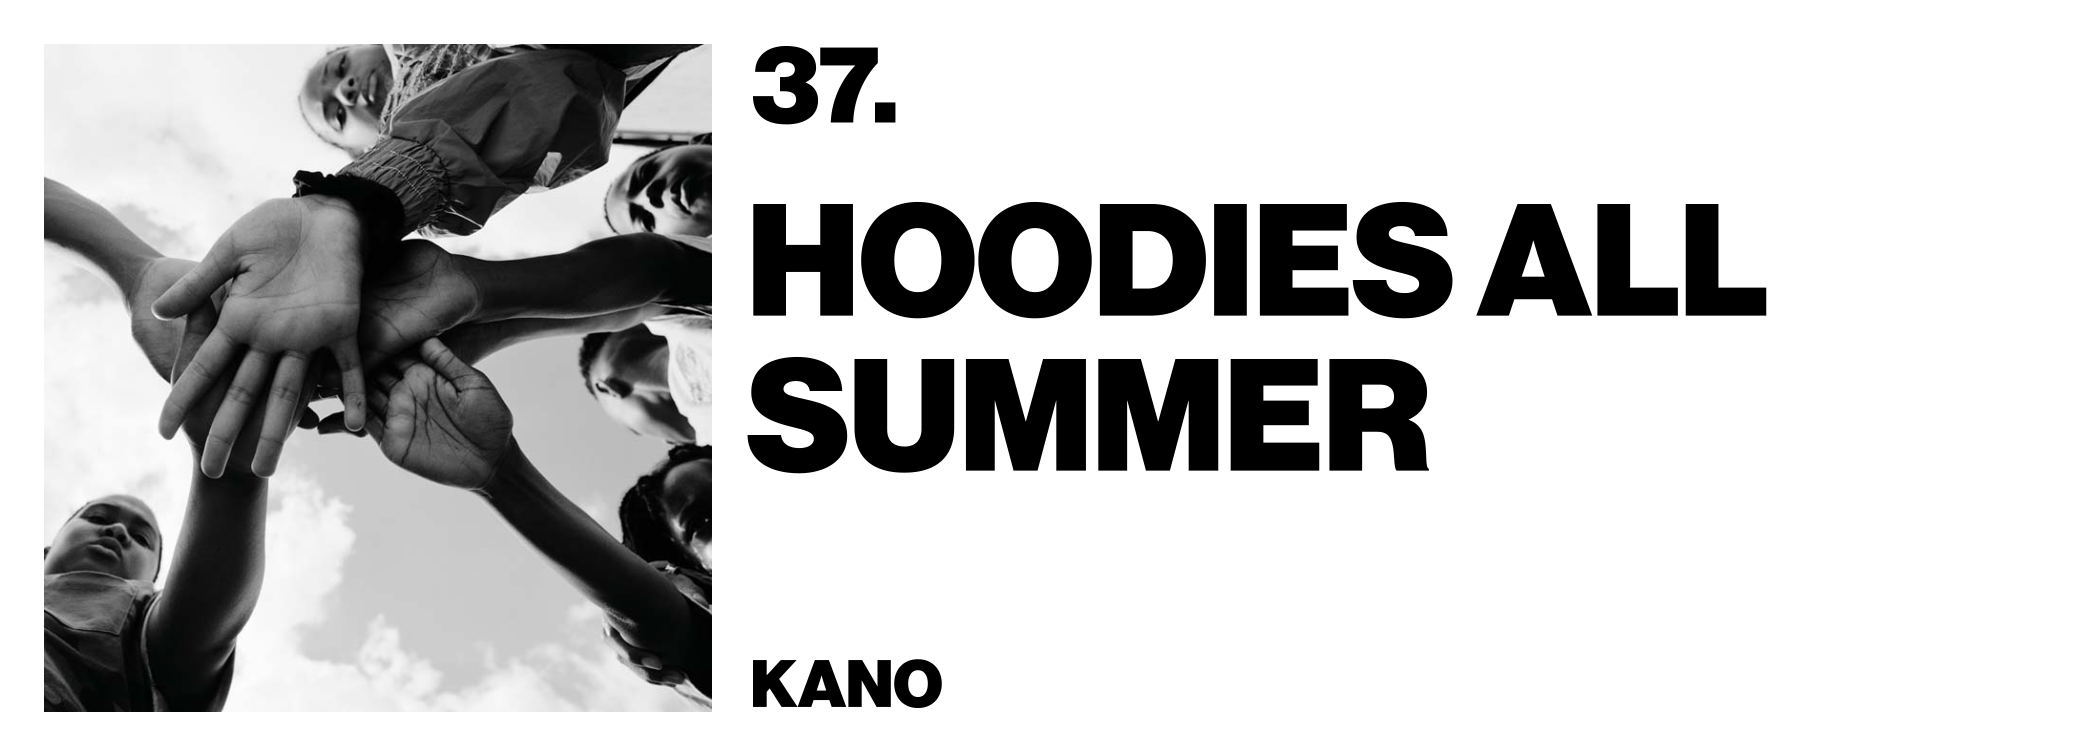 1576012029758-37-Kano-Hoodies-All-Summer